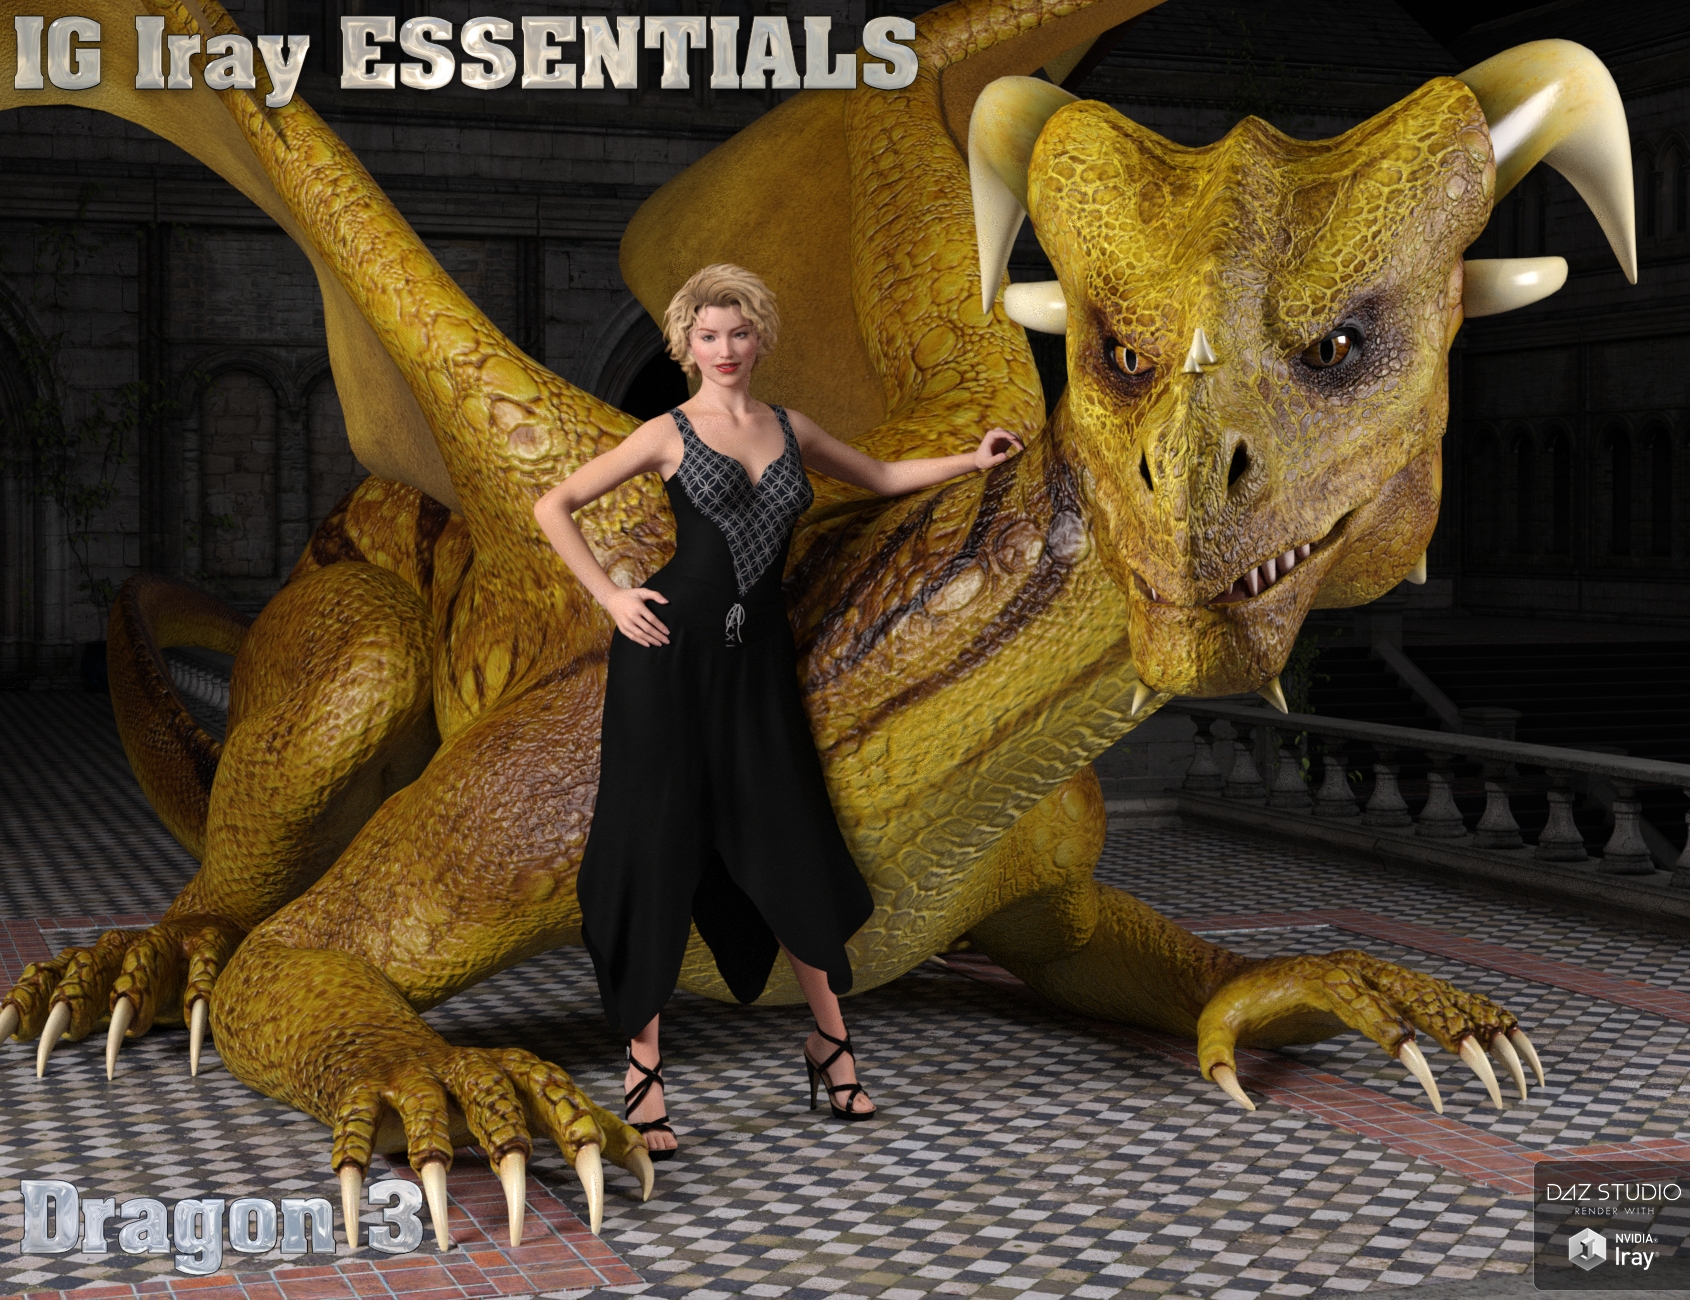 IG Iray Essentials - Dragon 3 by: IDG DesignsInaneGlory, 3D Models by Daz 3D